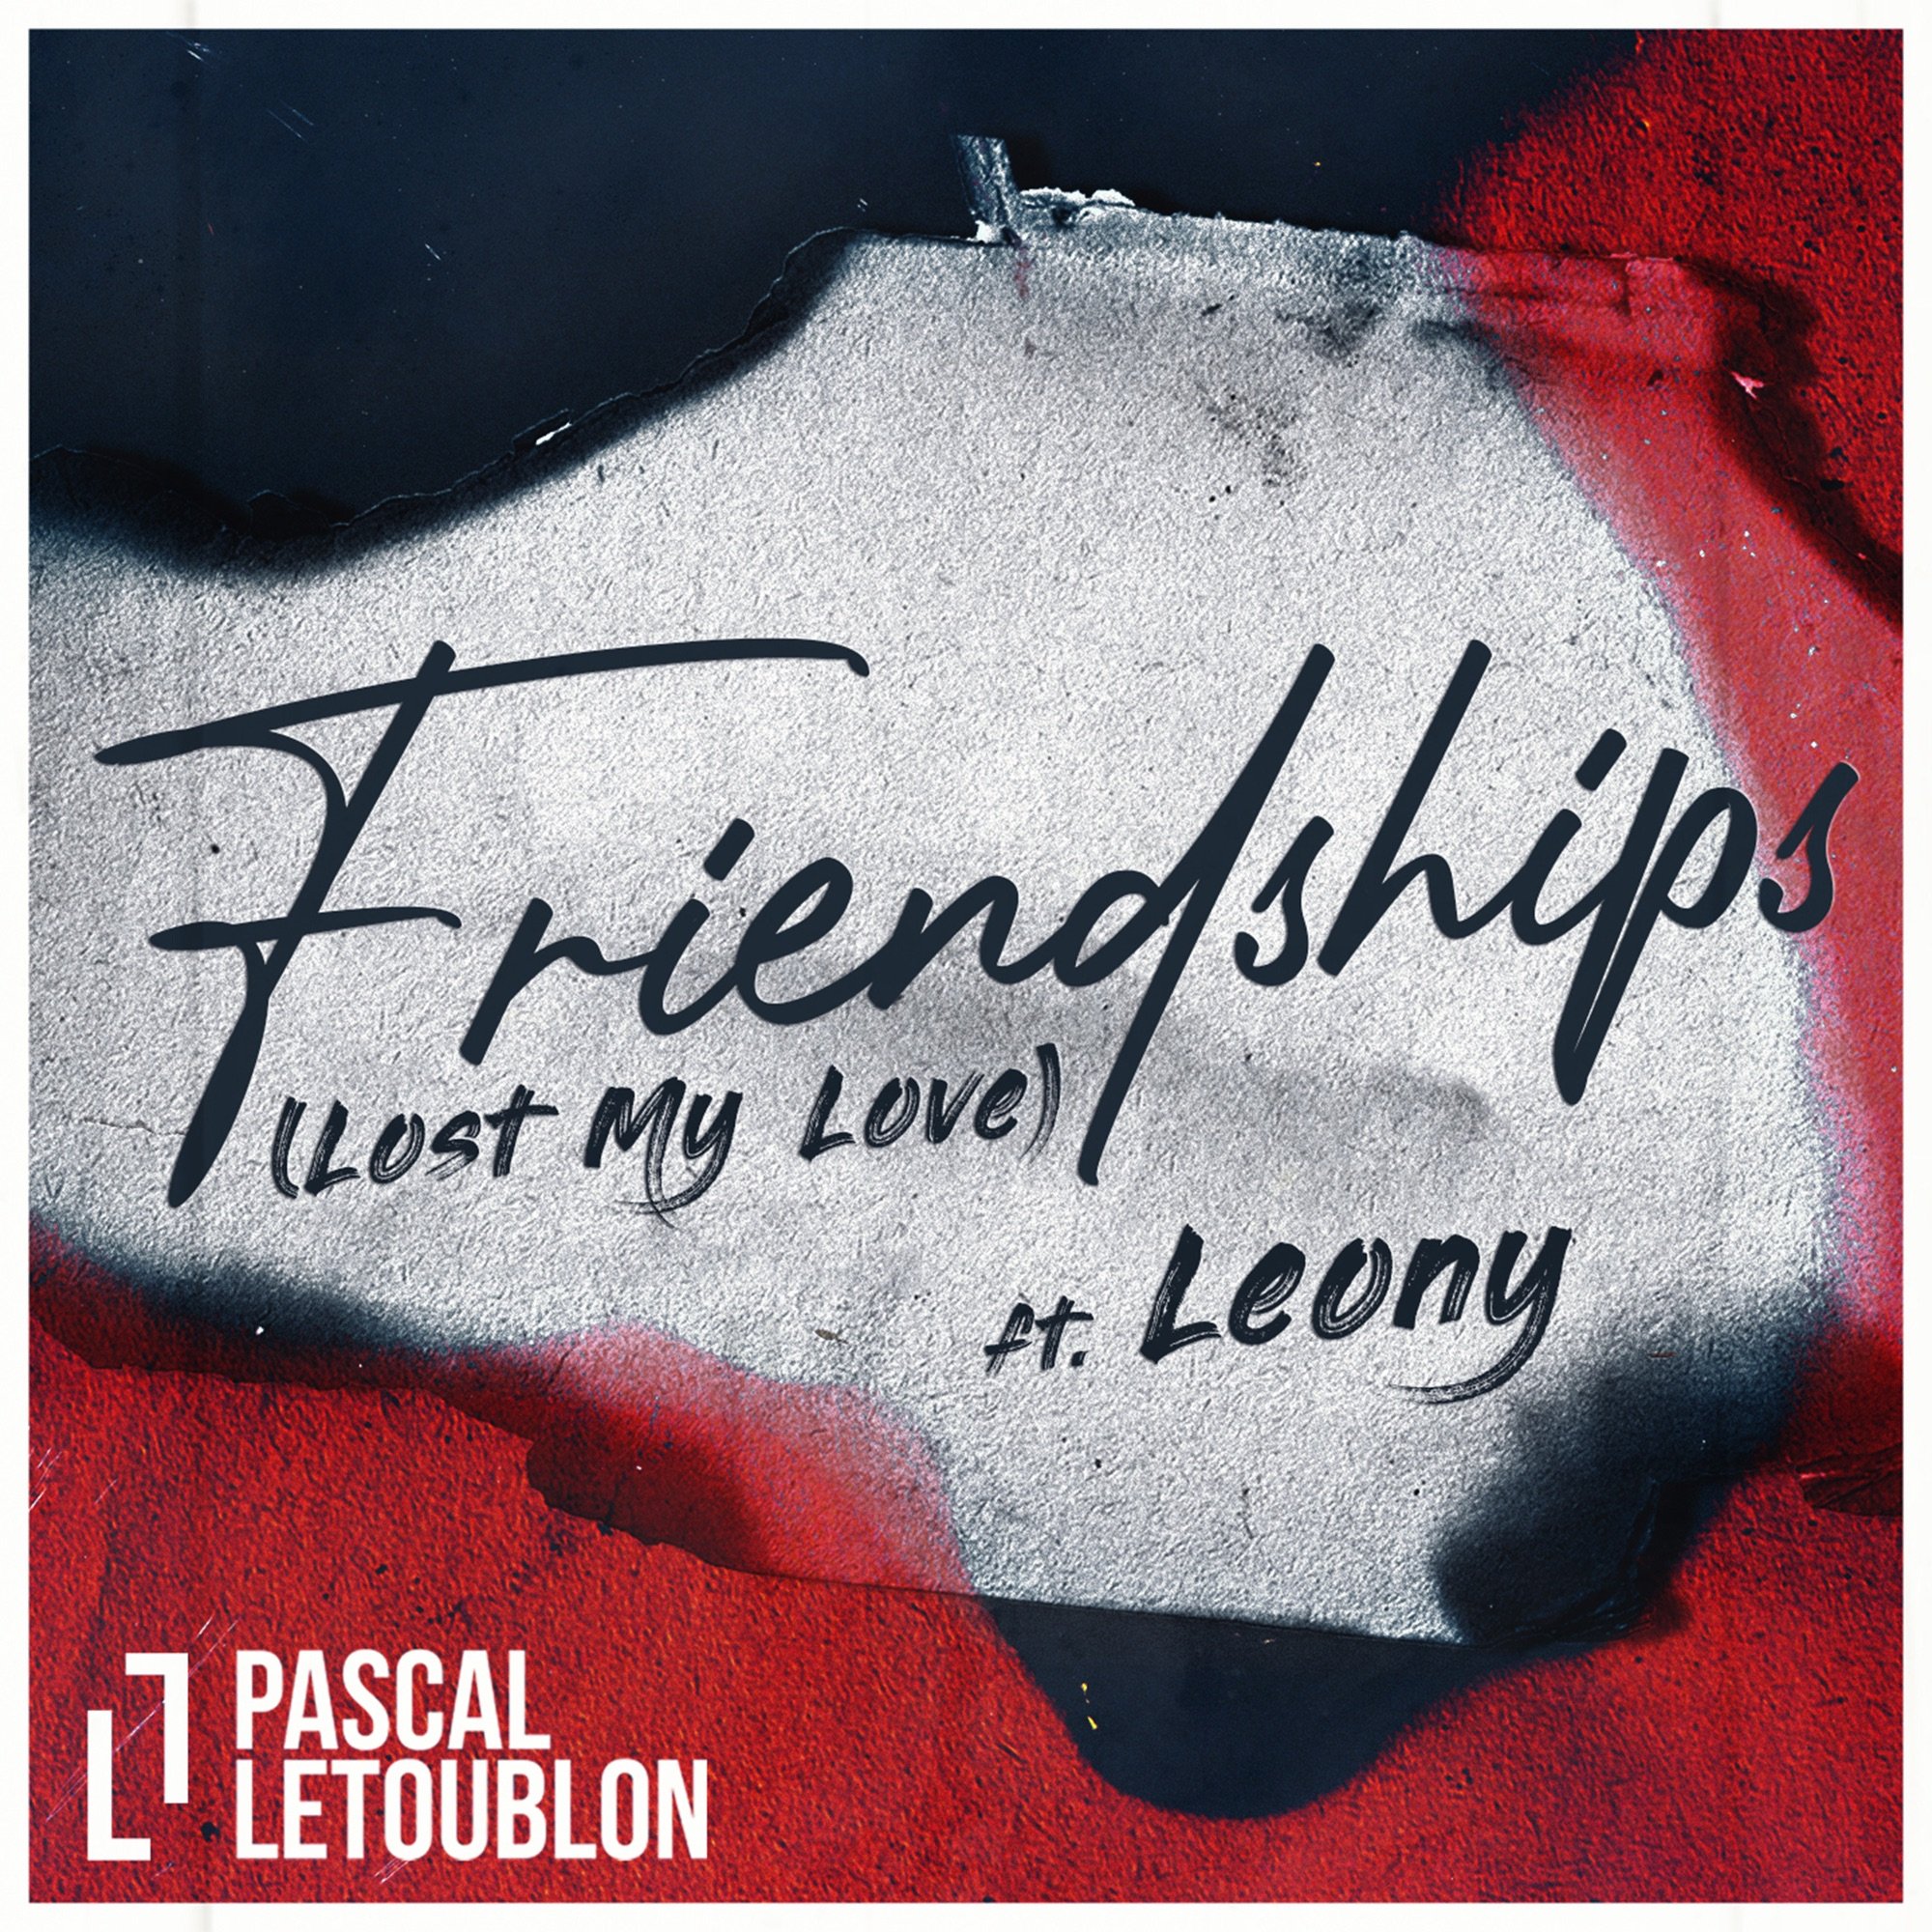 I lost my key last night. Pascal Letoublon Friendships. Pascal Letoublon, Leony - Friendships (Lost my Love). Pascal Letoublon feat. Leony. Friendships Паскаль Летублон.